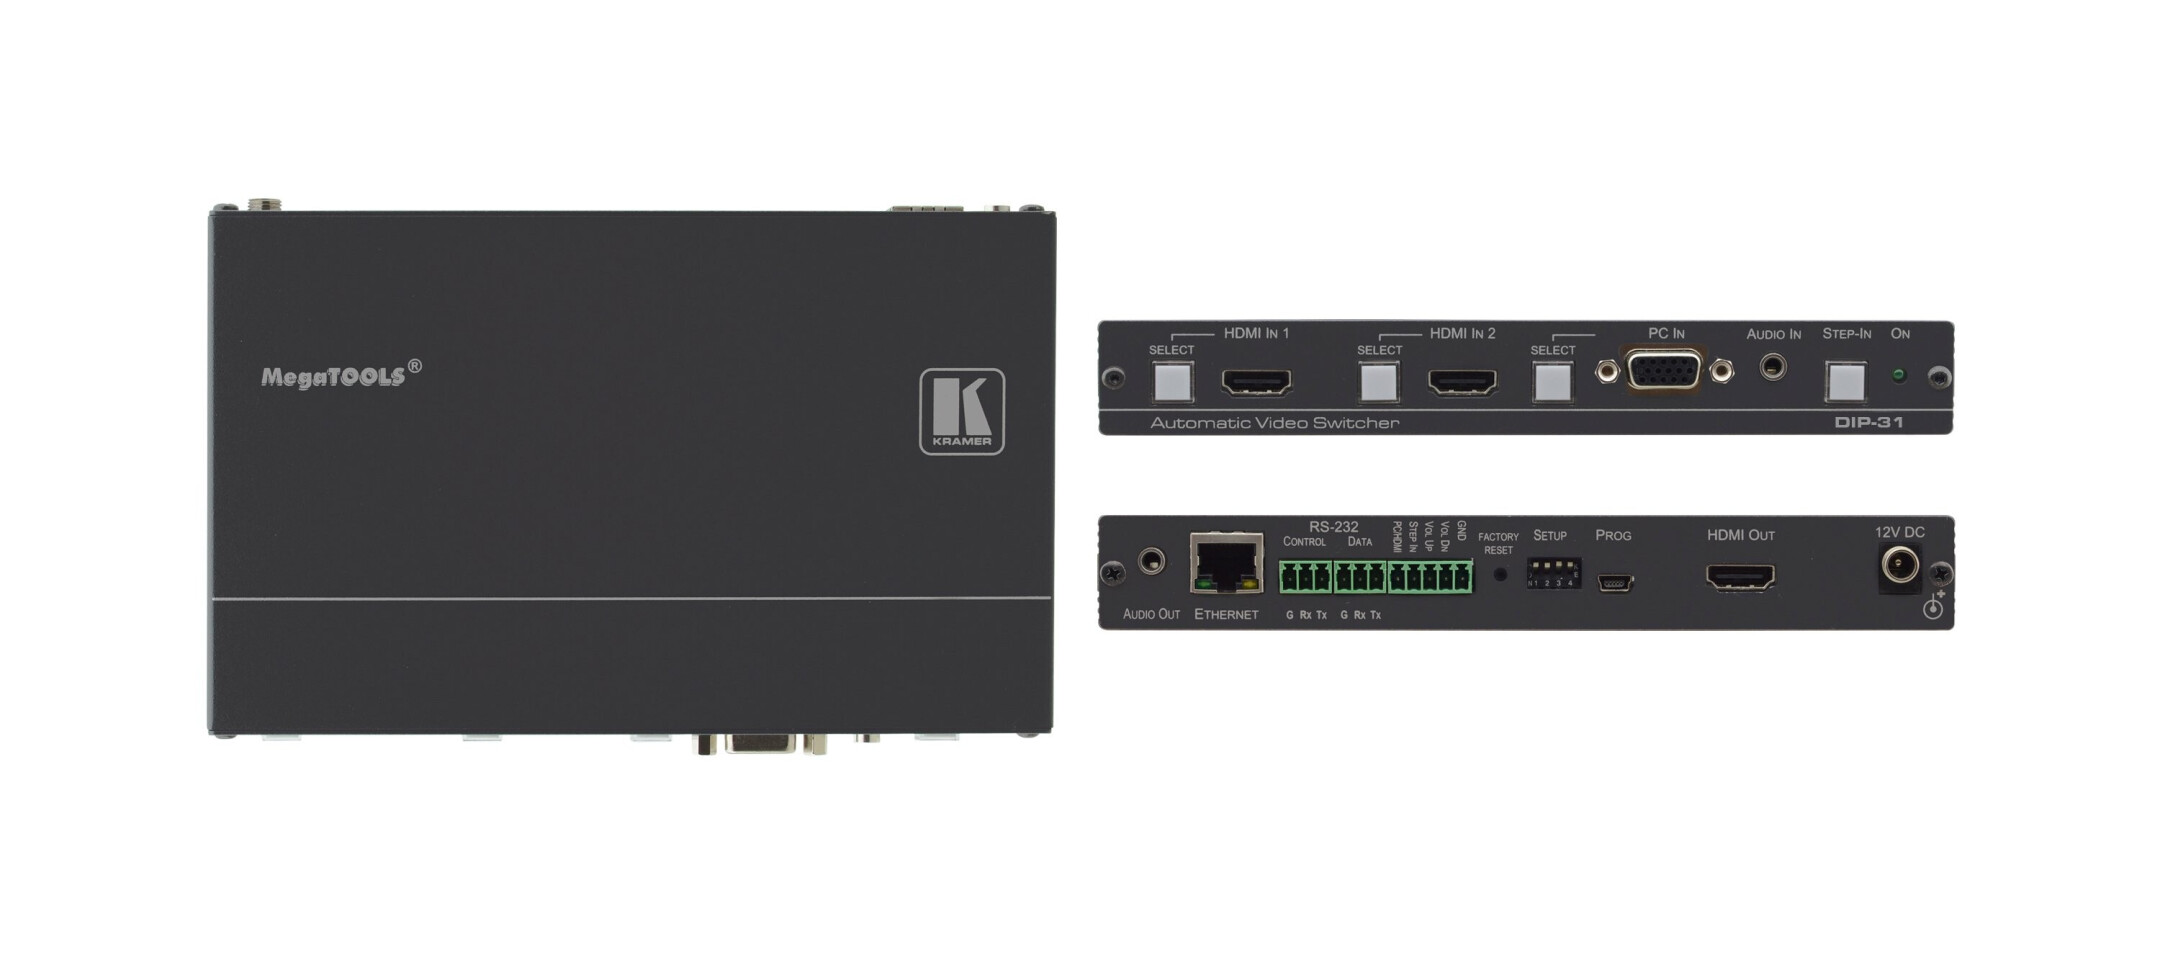 Kramer-DIP-31-4K60-4-2-0-HDMI-Computer-Graphics-Automatic-Video-Switcher